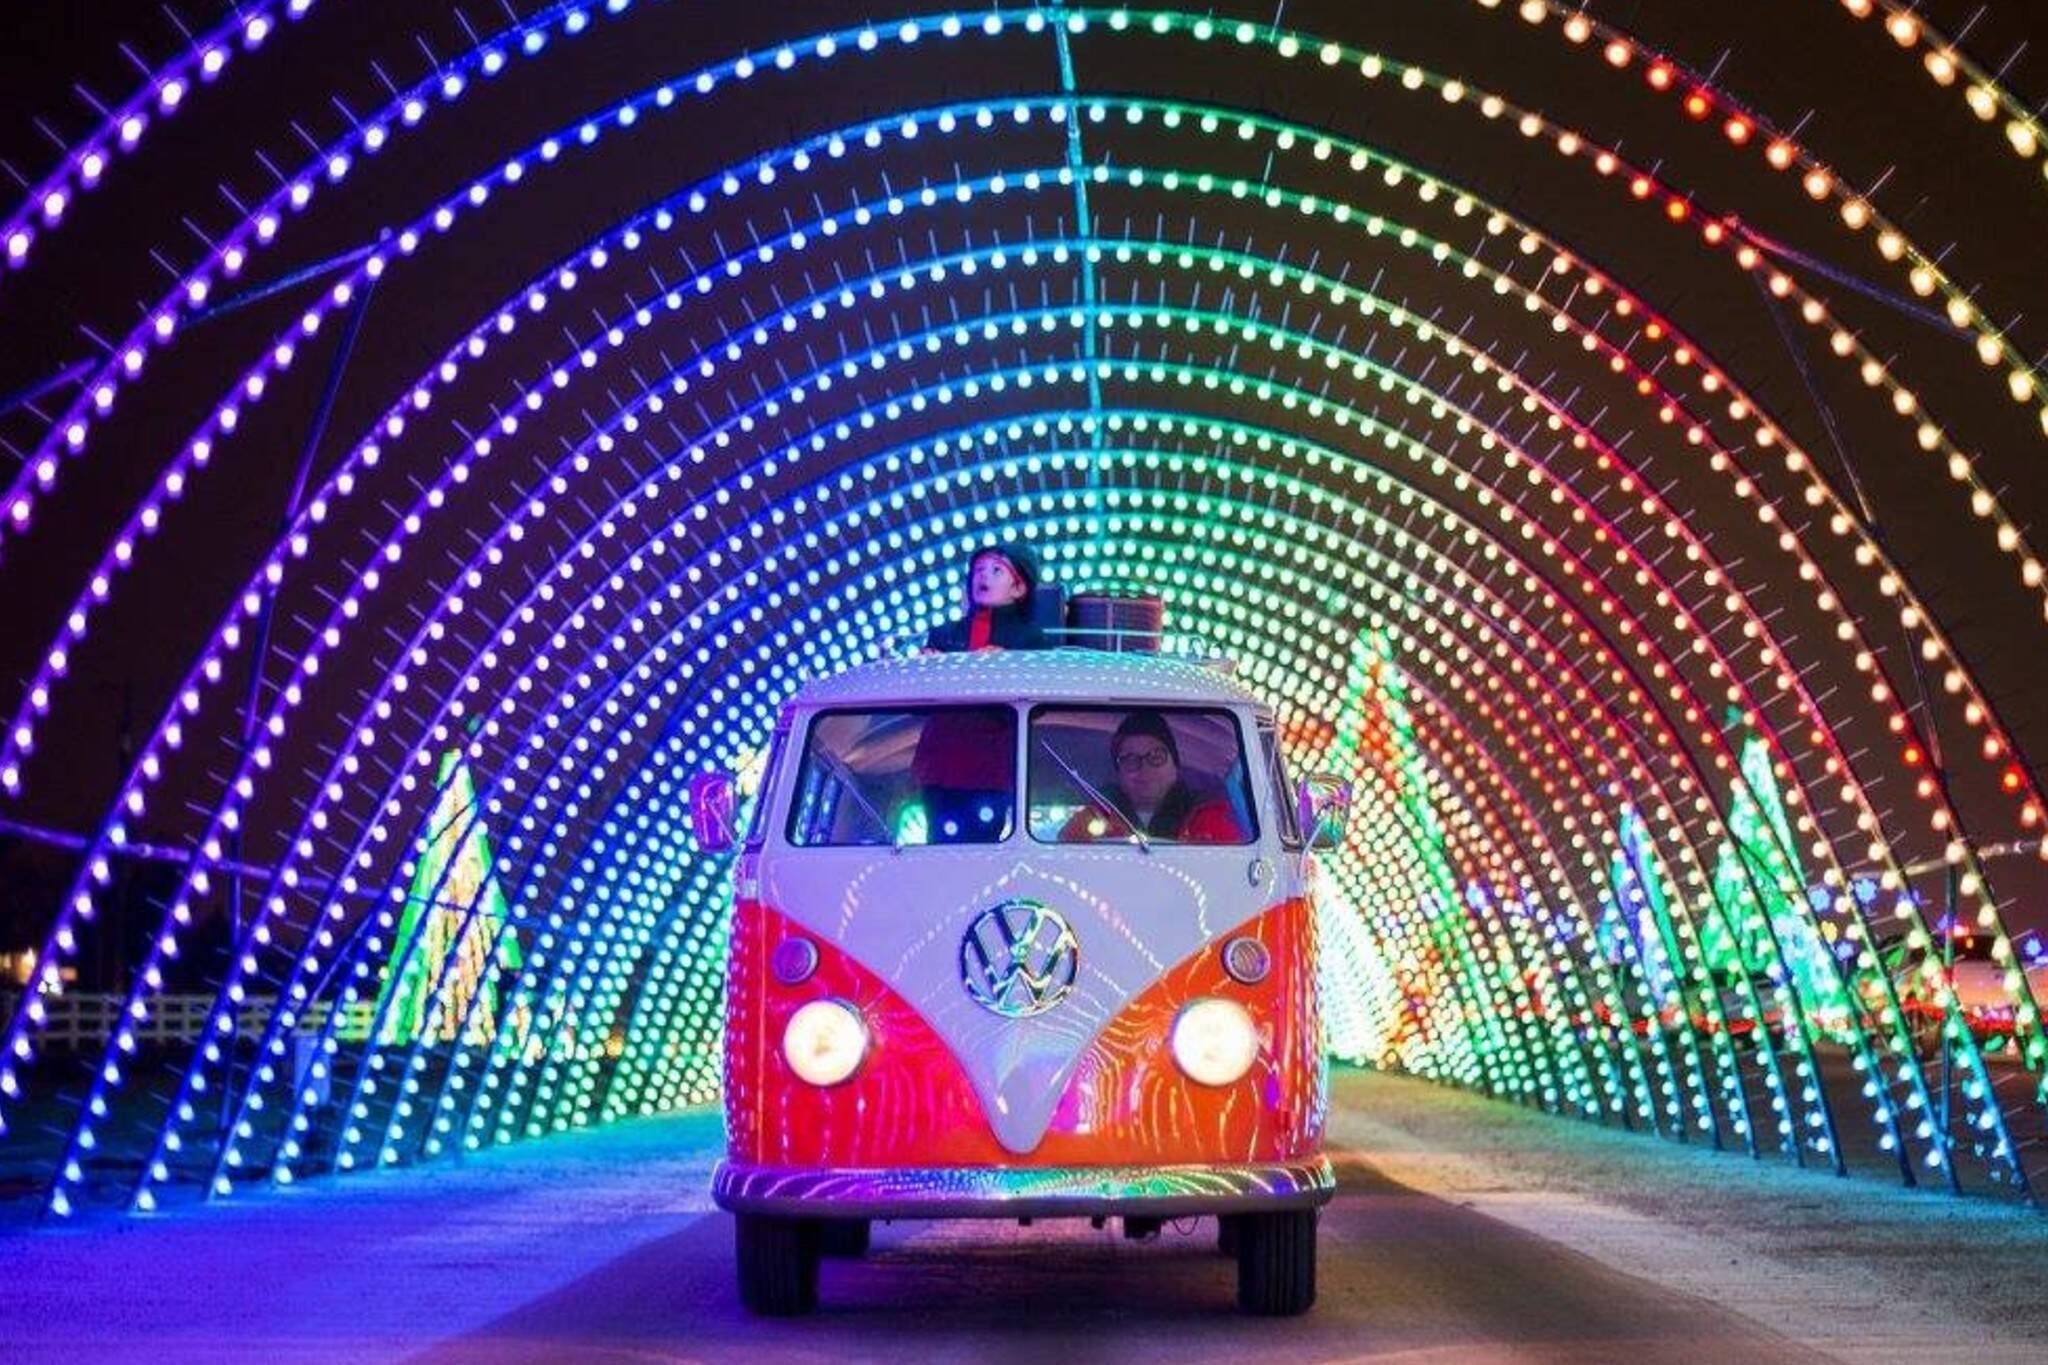 Drivethru holiday lights festival opens near Toronto this weekend